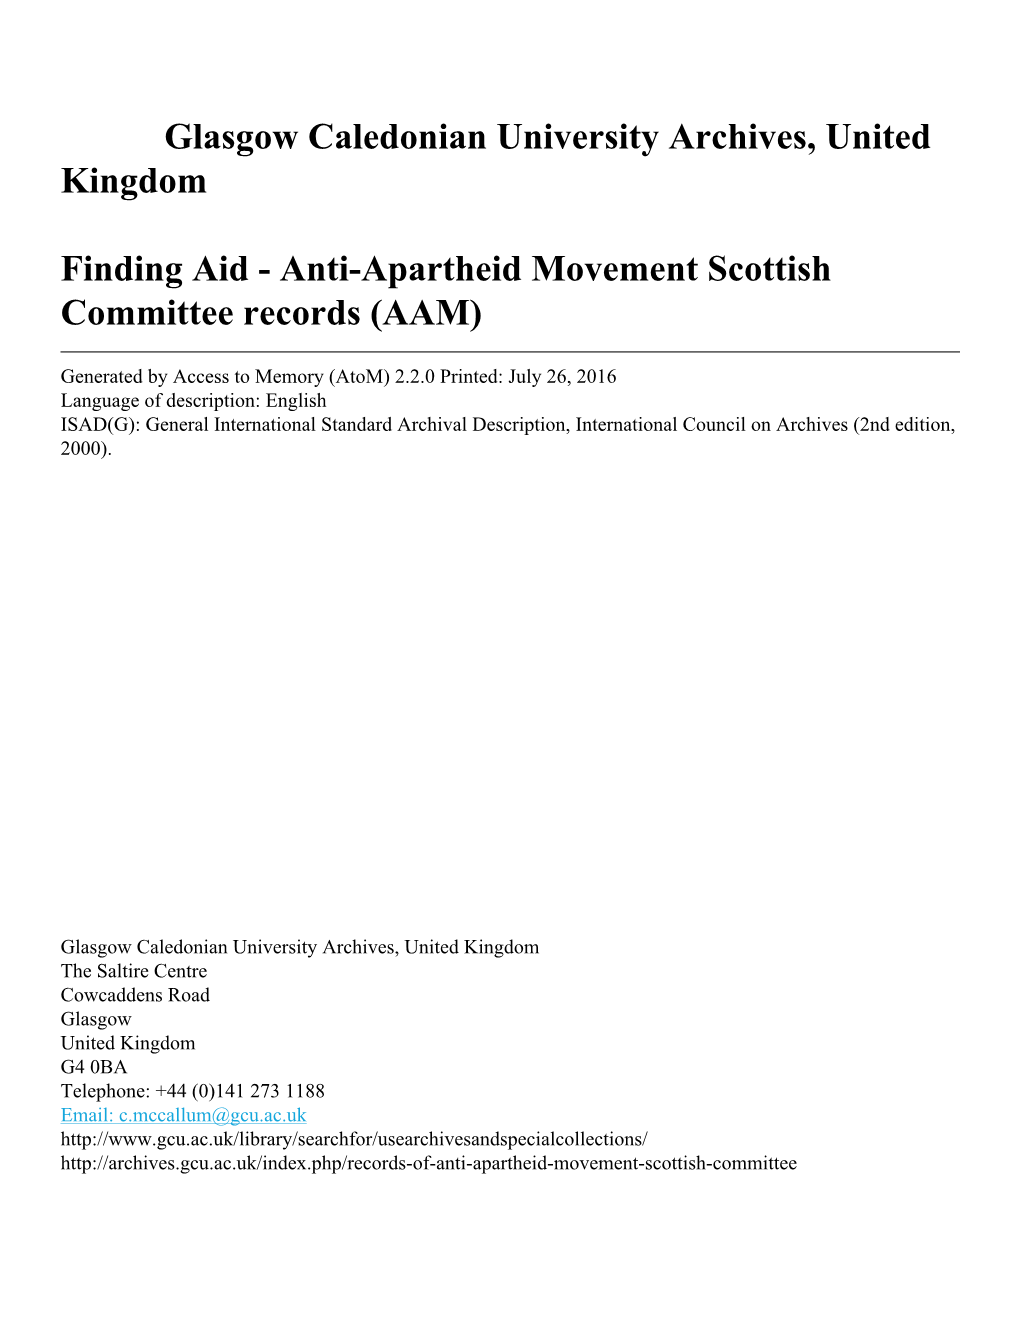 Anti-Apartheid Movement Scottish Committee Records (AAM)